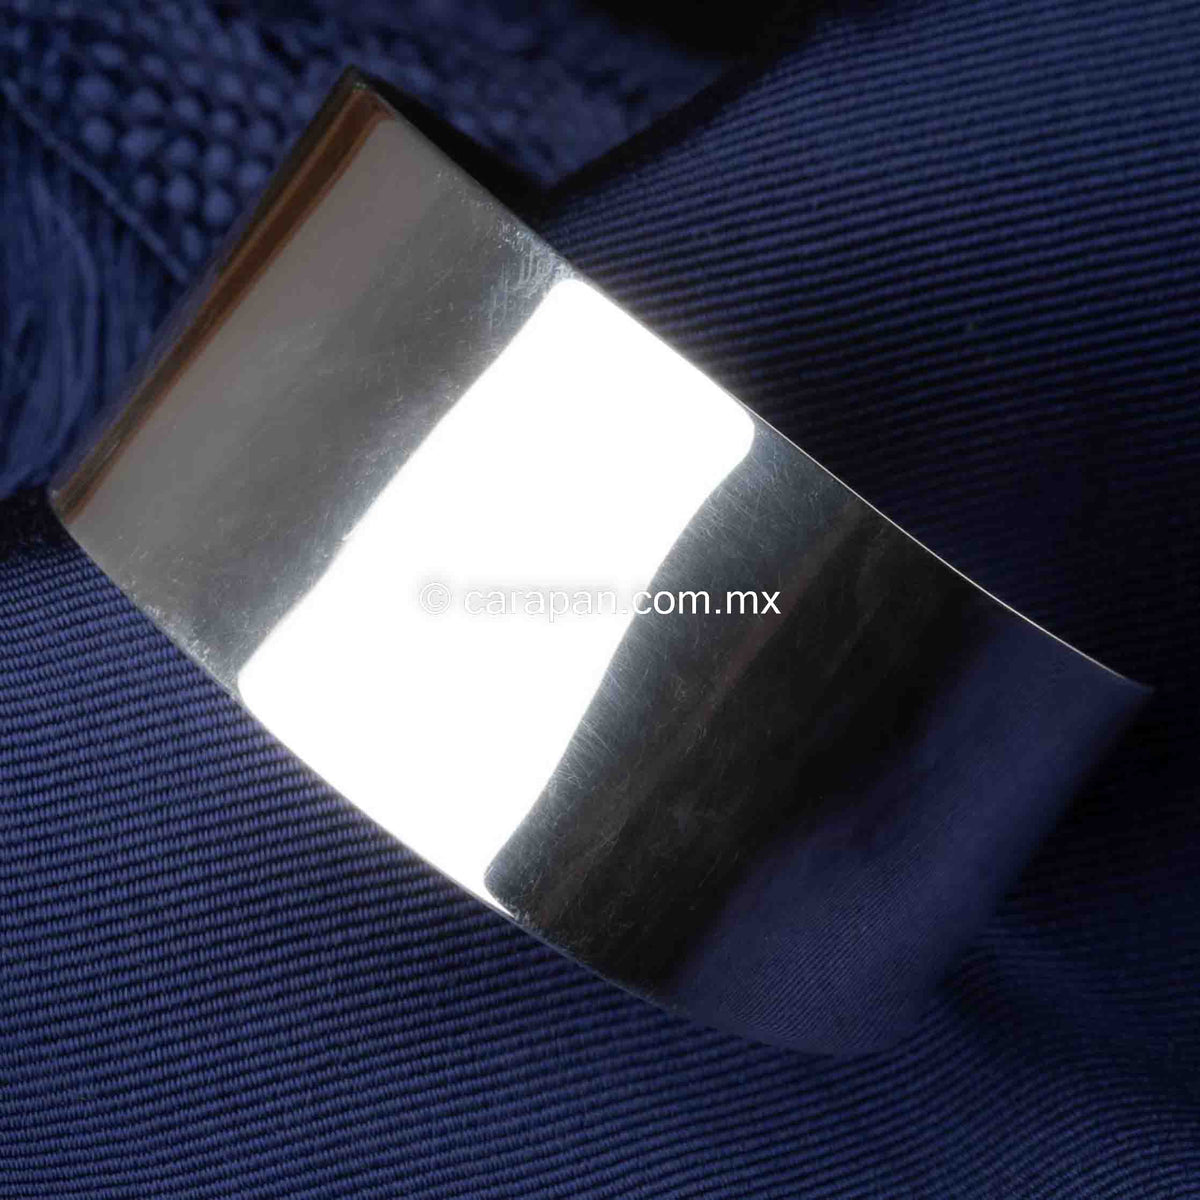 Polished Silver Cuff Bracelet